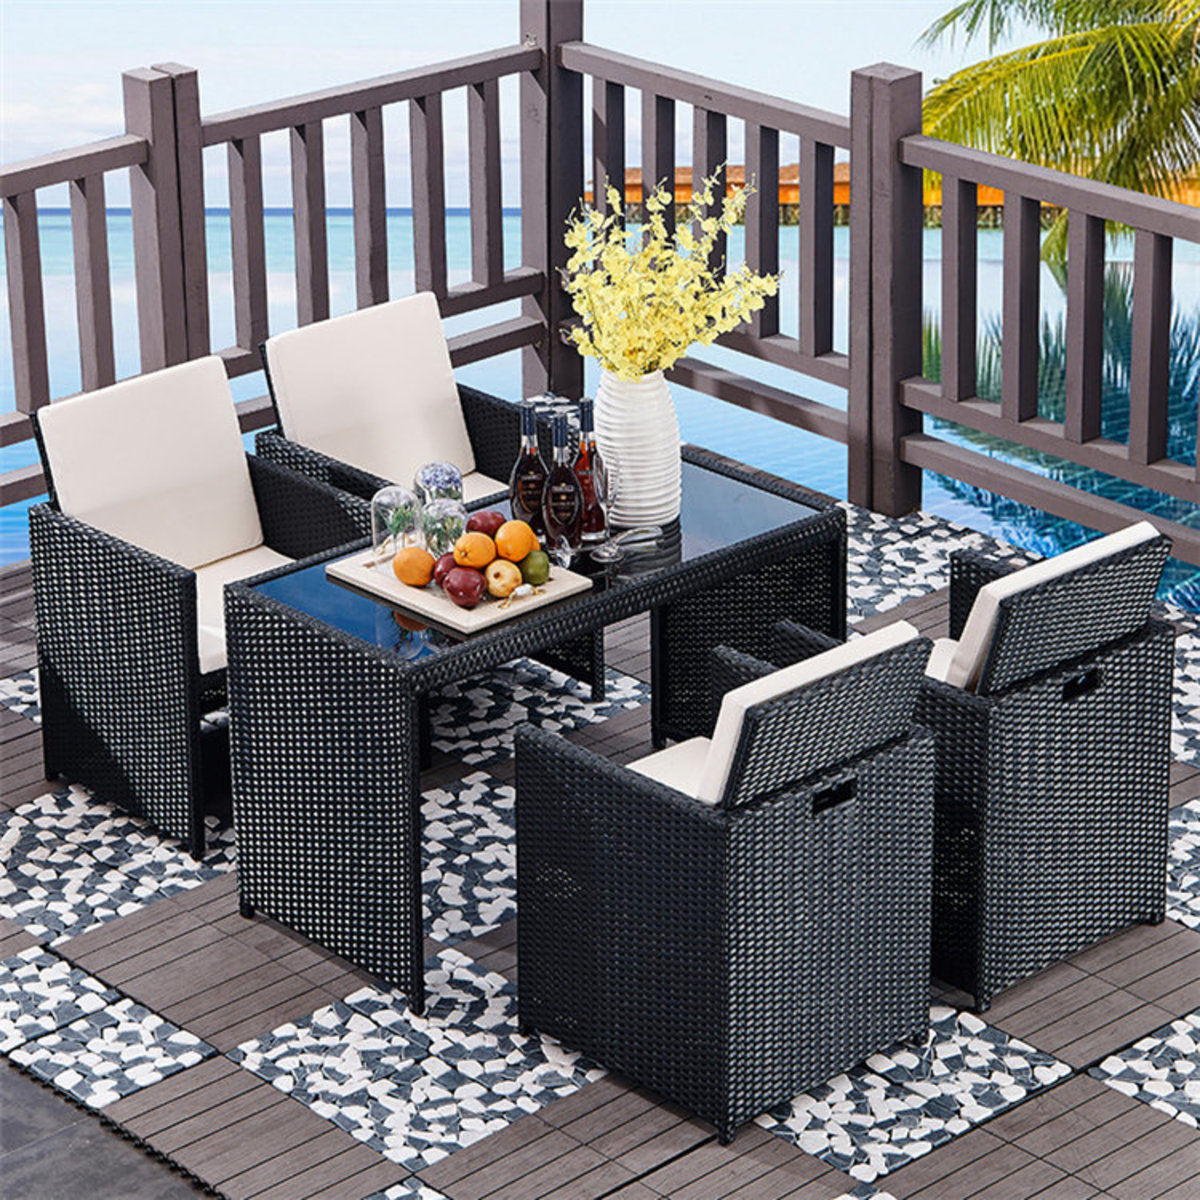 Outdoor wicker chair garden balcony table and chair combination garden outdoor wicker chair